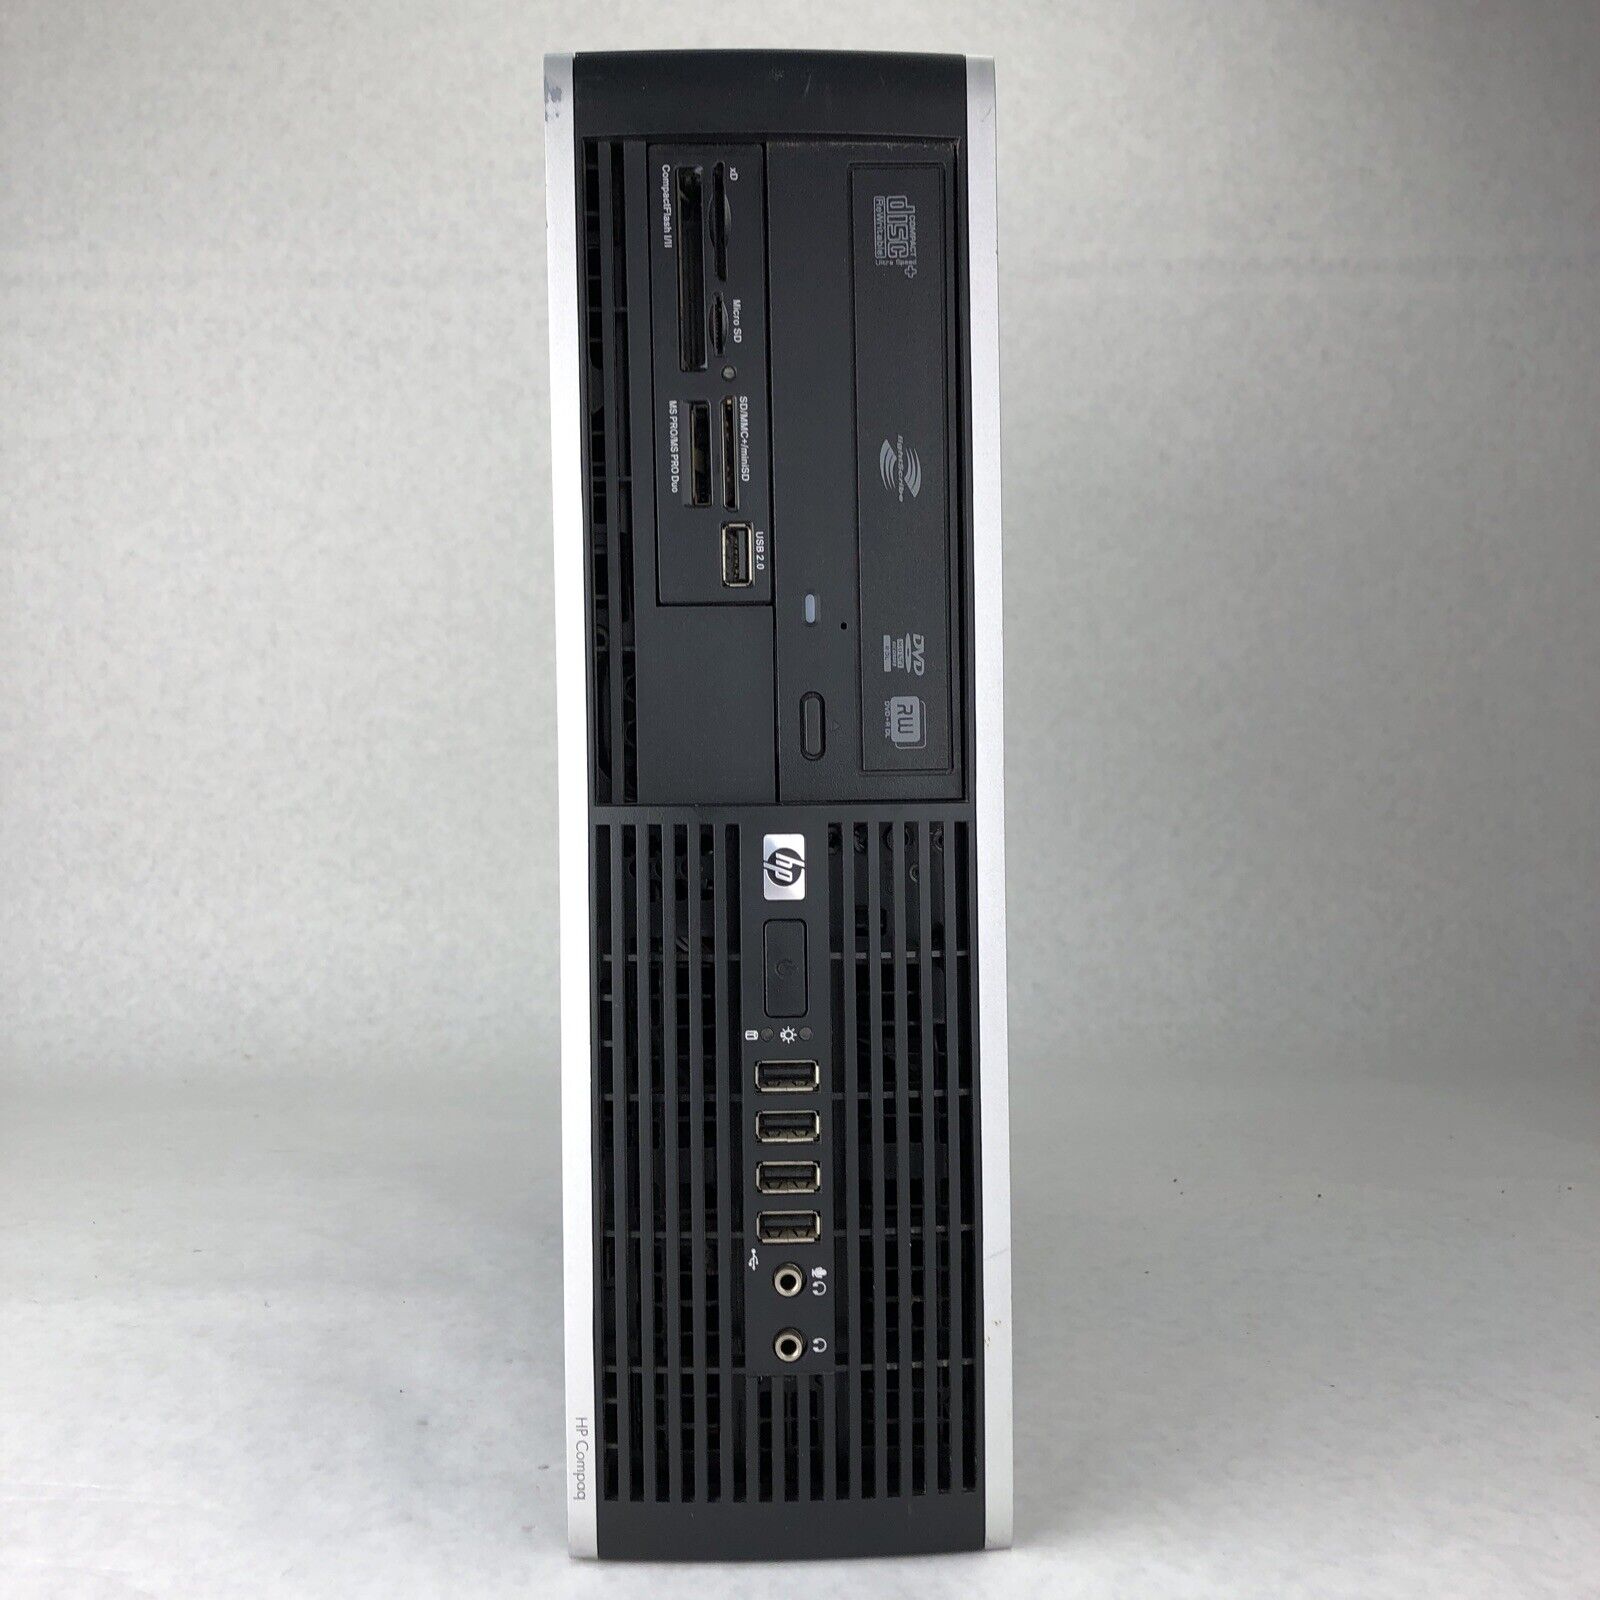 HP Compaq 6000 Pro SFF Intel E6300 2.80GHz CPU 4GB RAM No HDD No OS